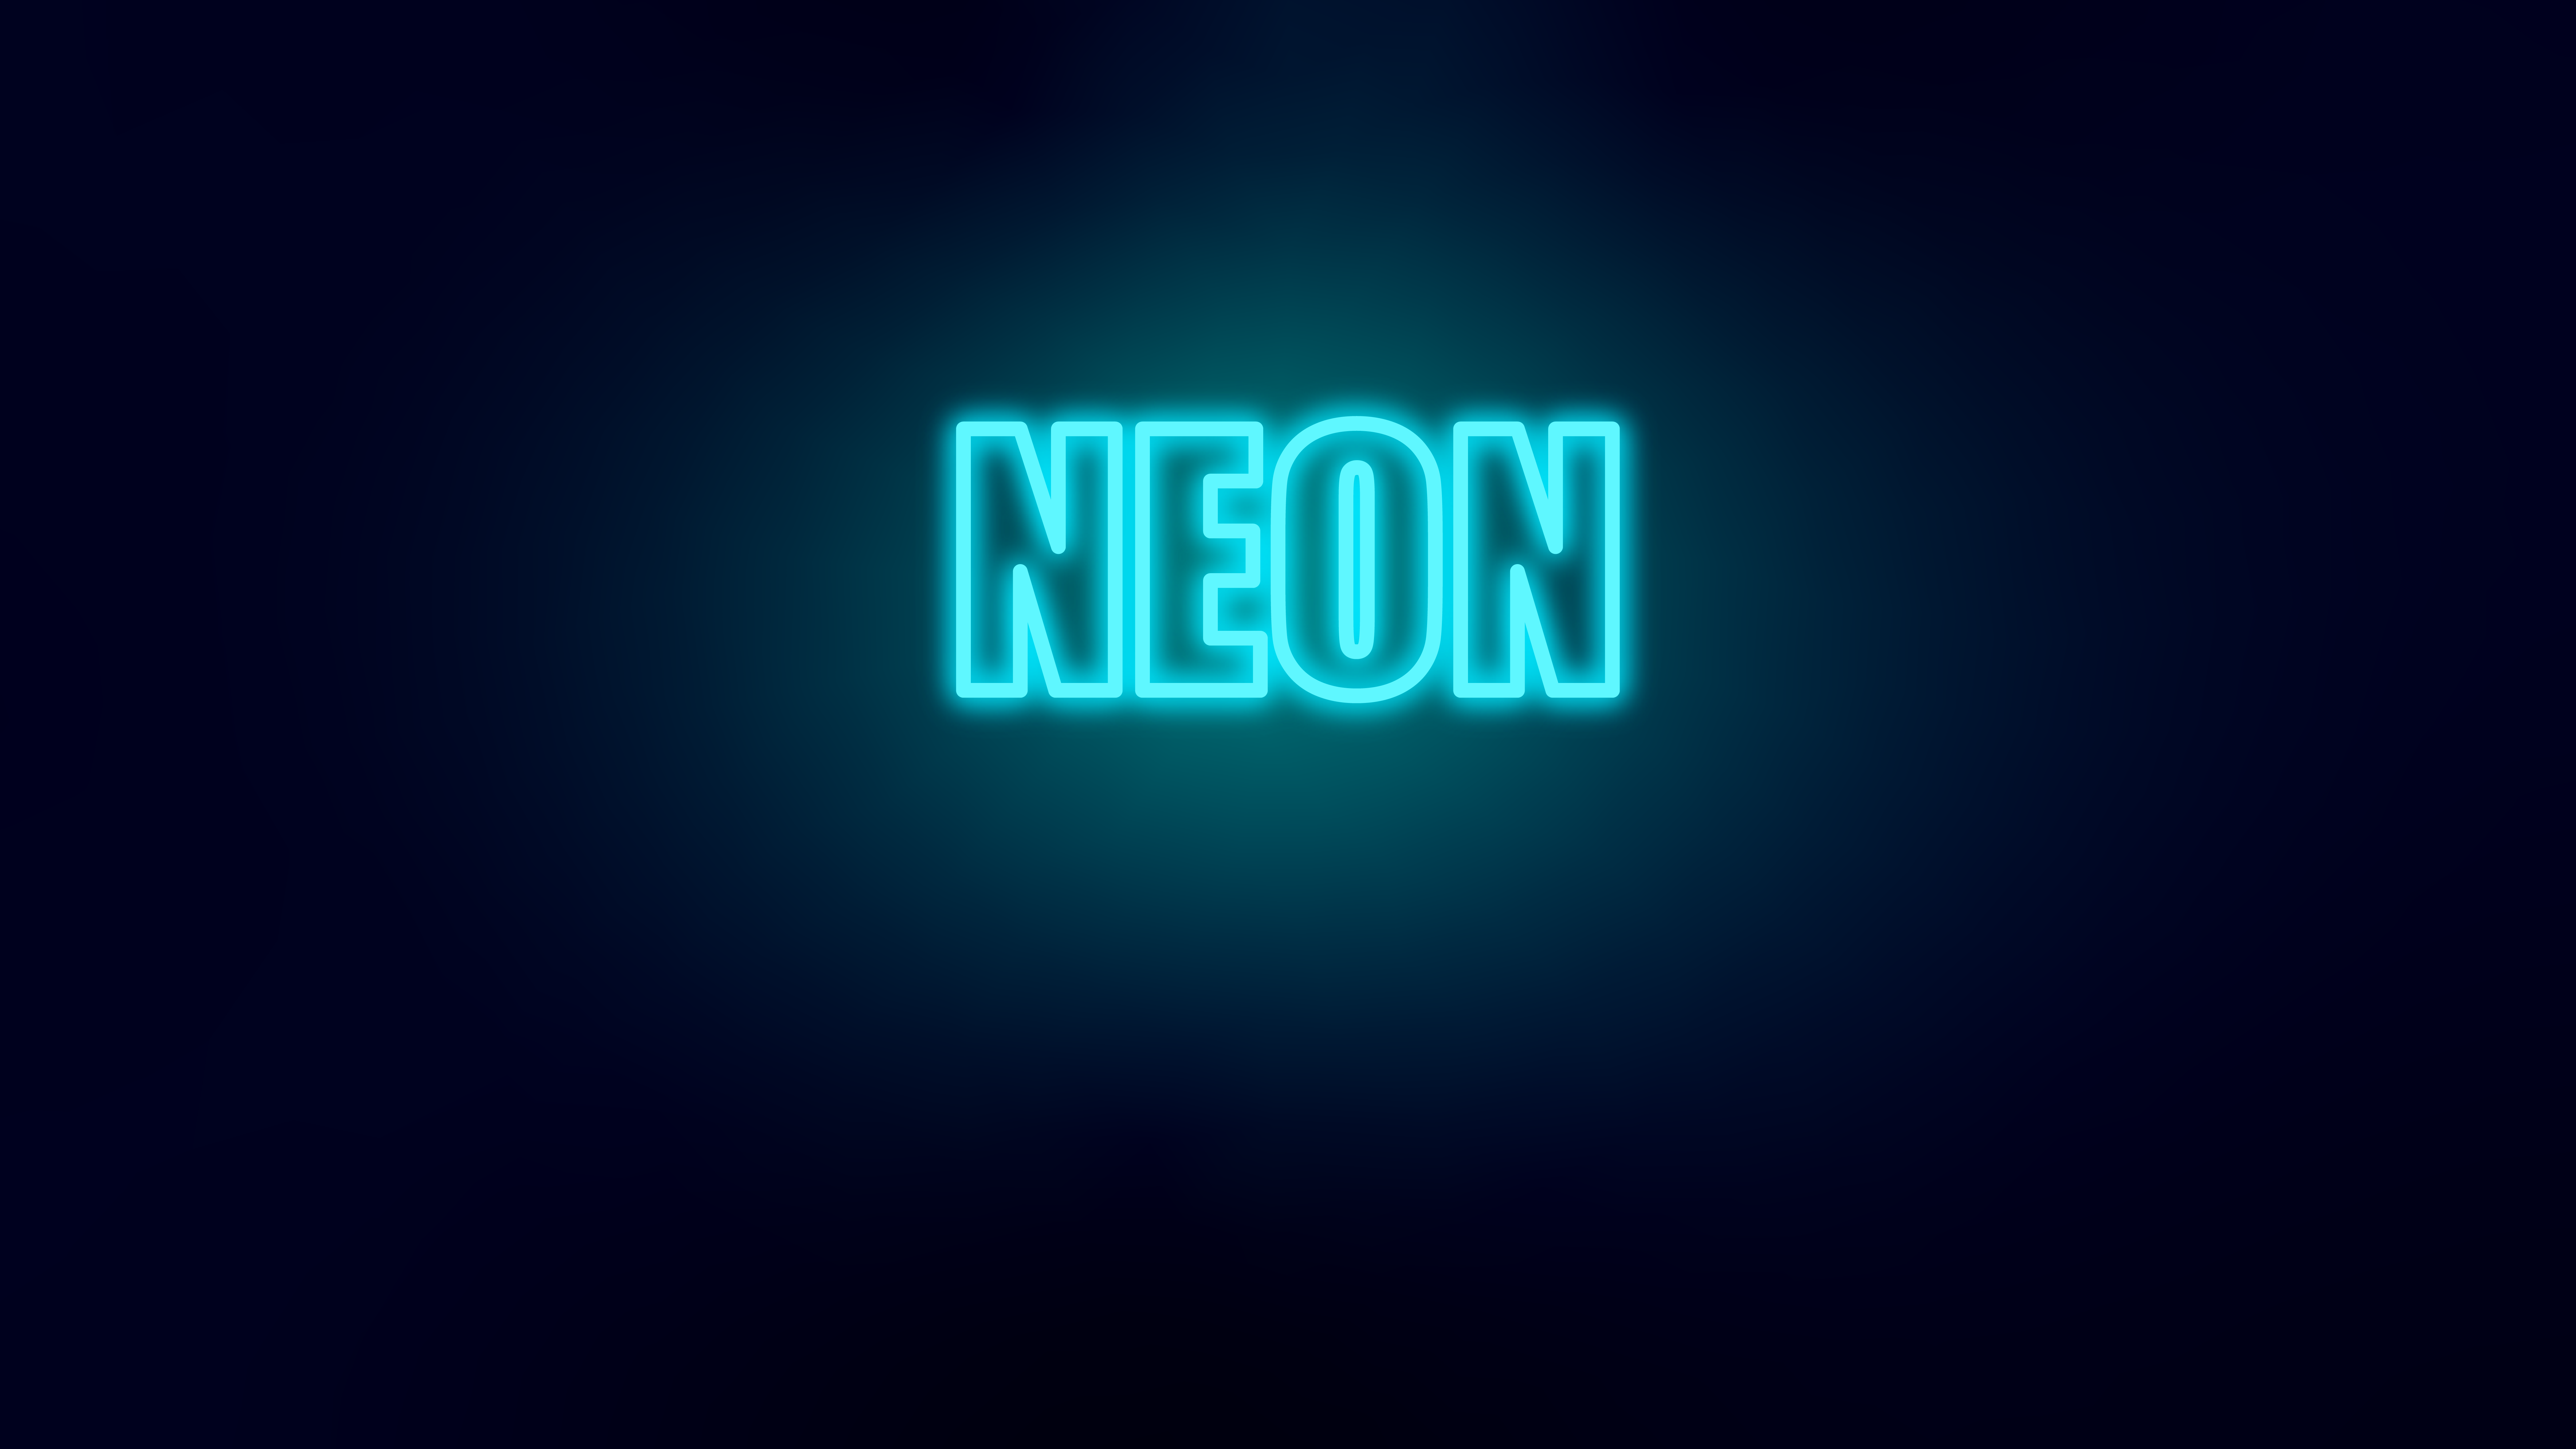 General 8000x4500 neon typography text minimalism blue background